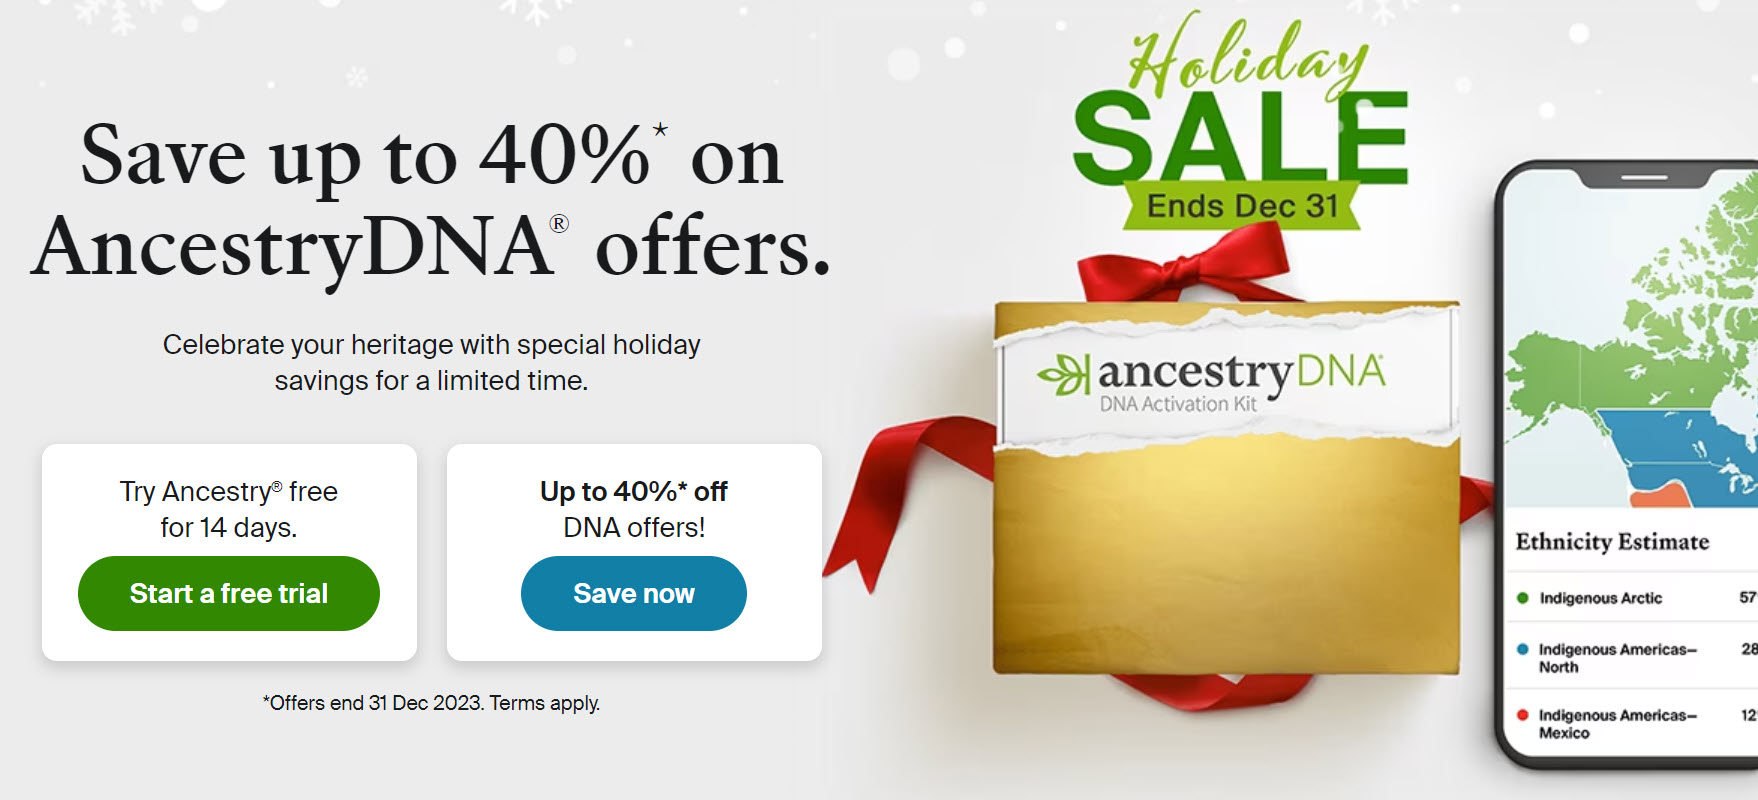 Best Holiday DNA Sales: Save up to 40% on AncestryDNA